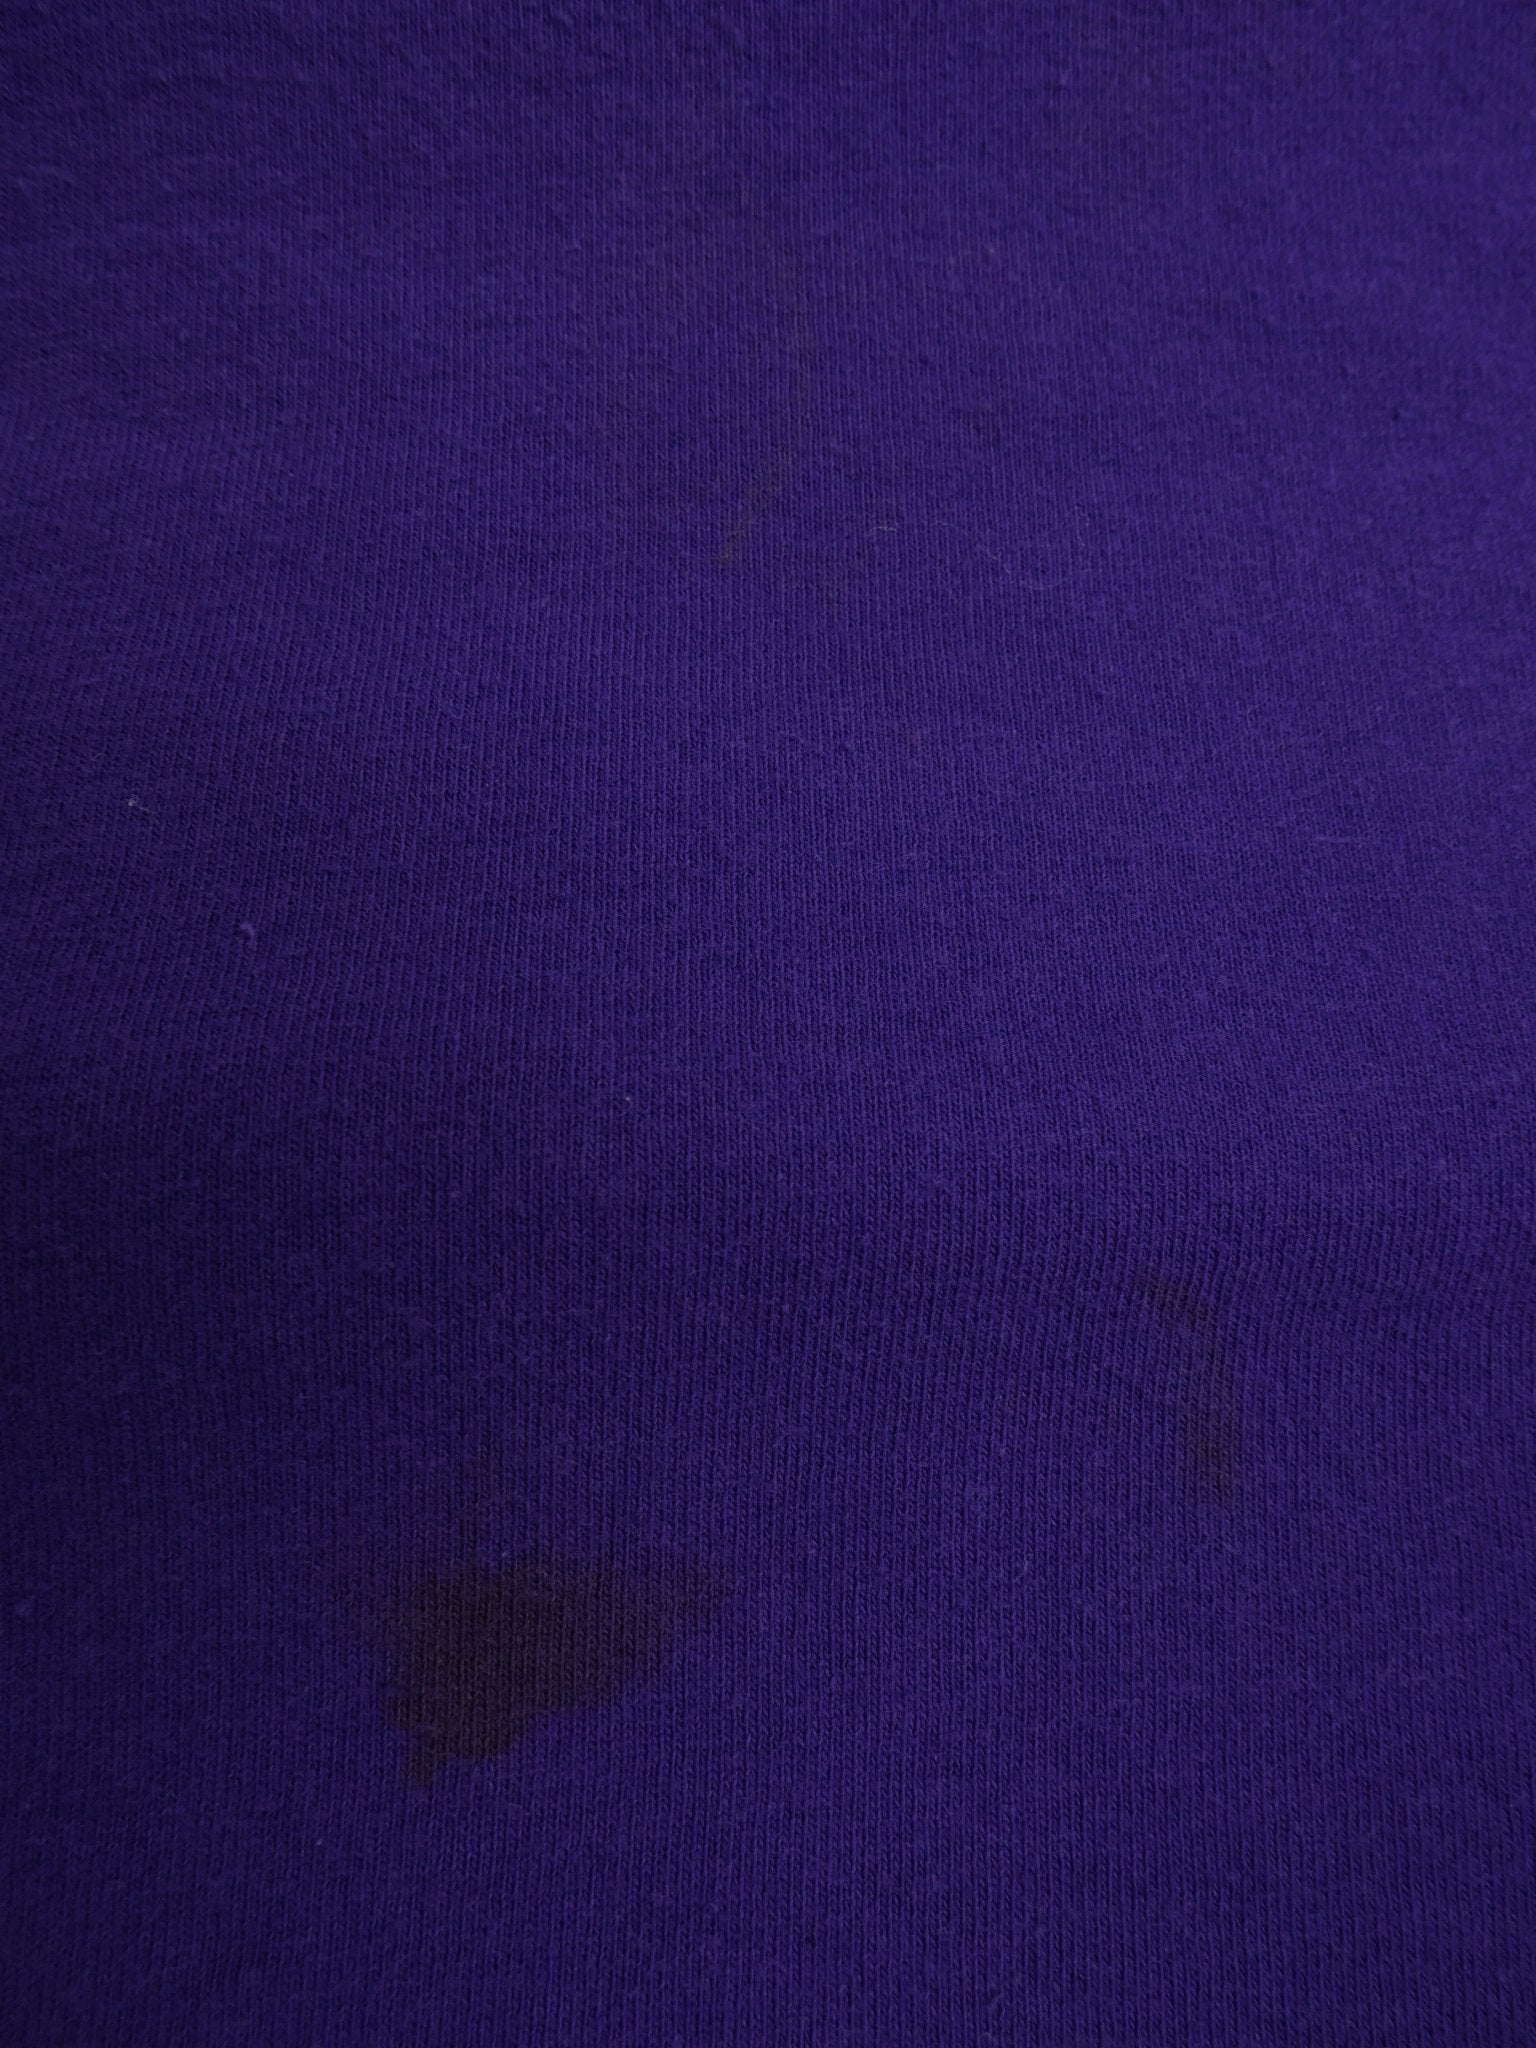 embroidered Print purple Shirt - Peeces